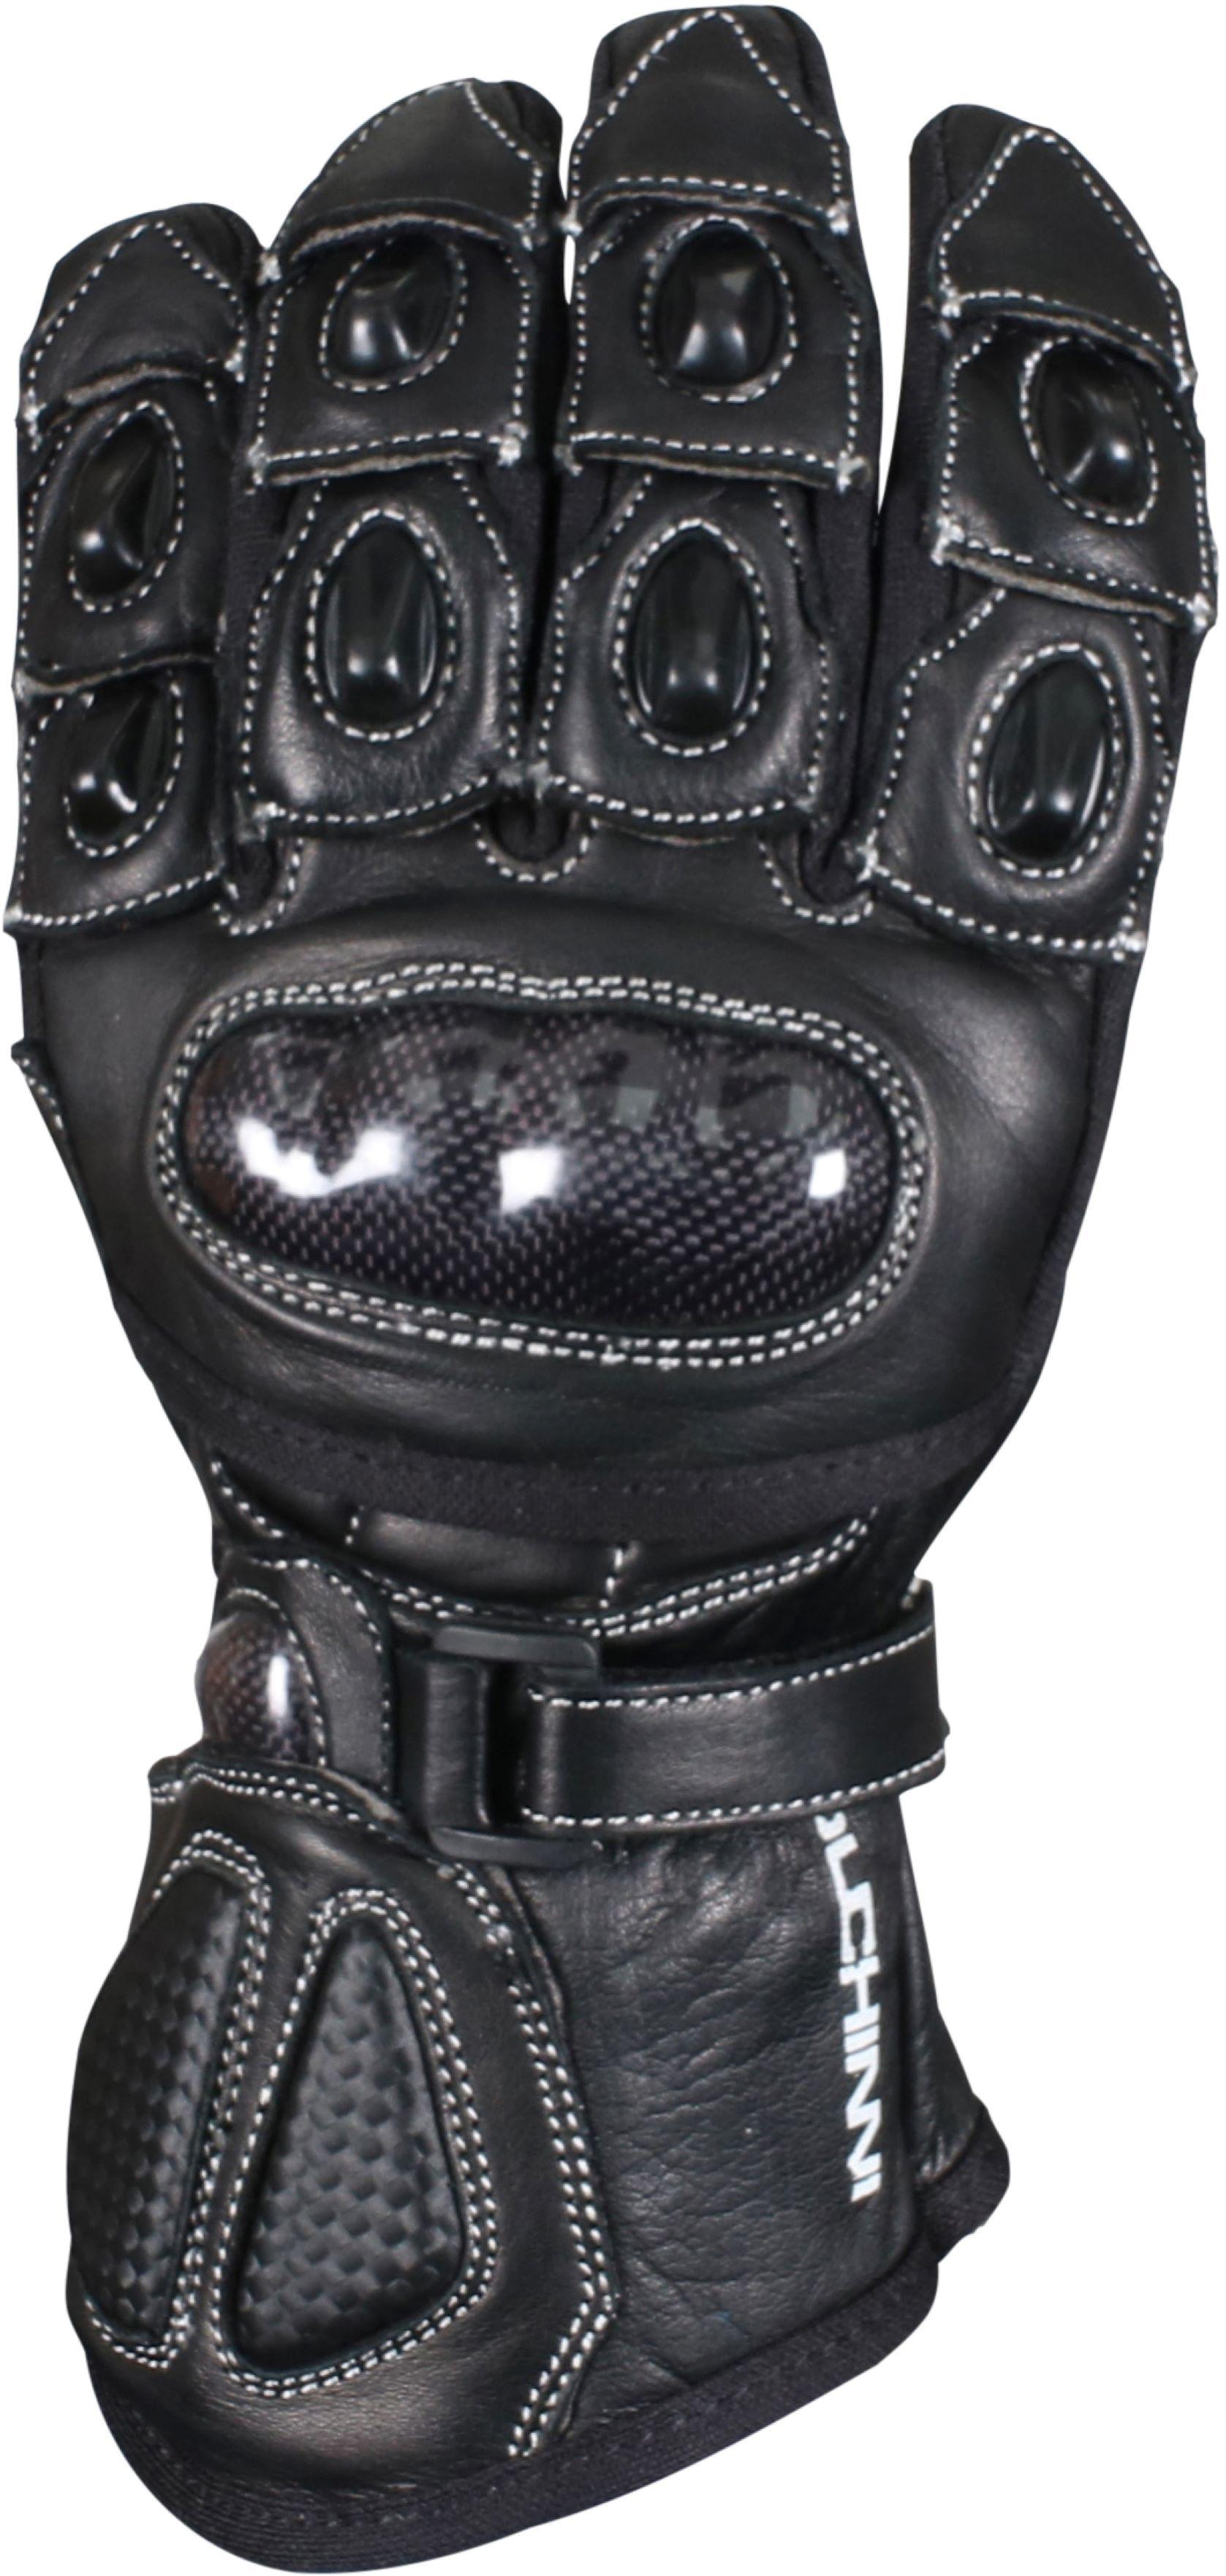 Duchinni Bambino Youth Motorcycle Gloves - Black, L